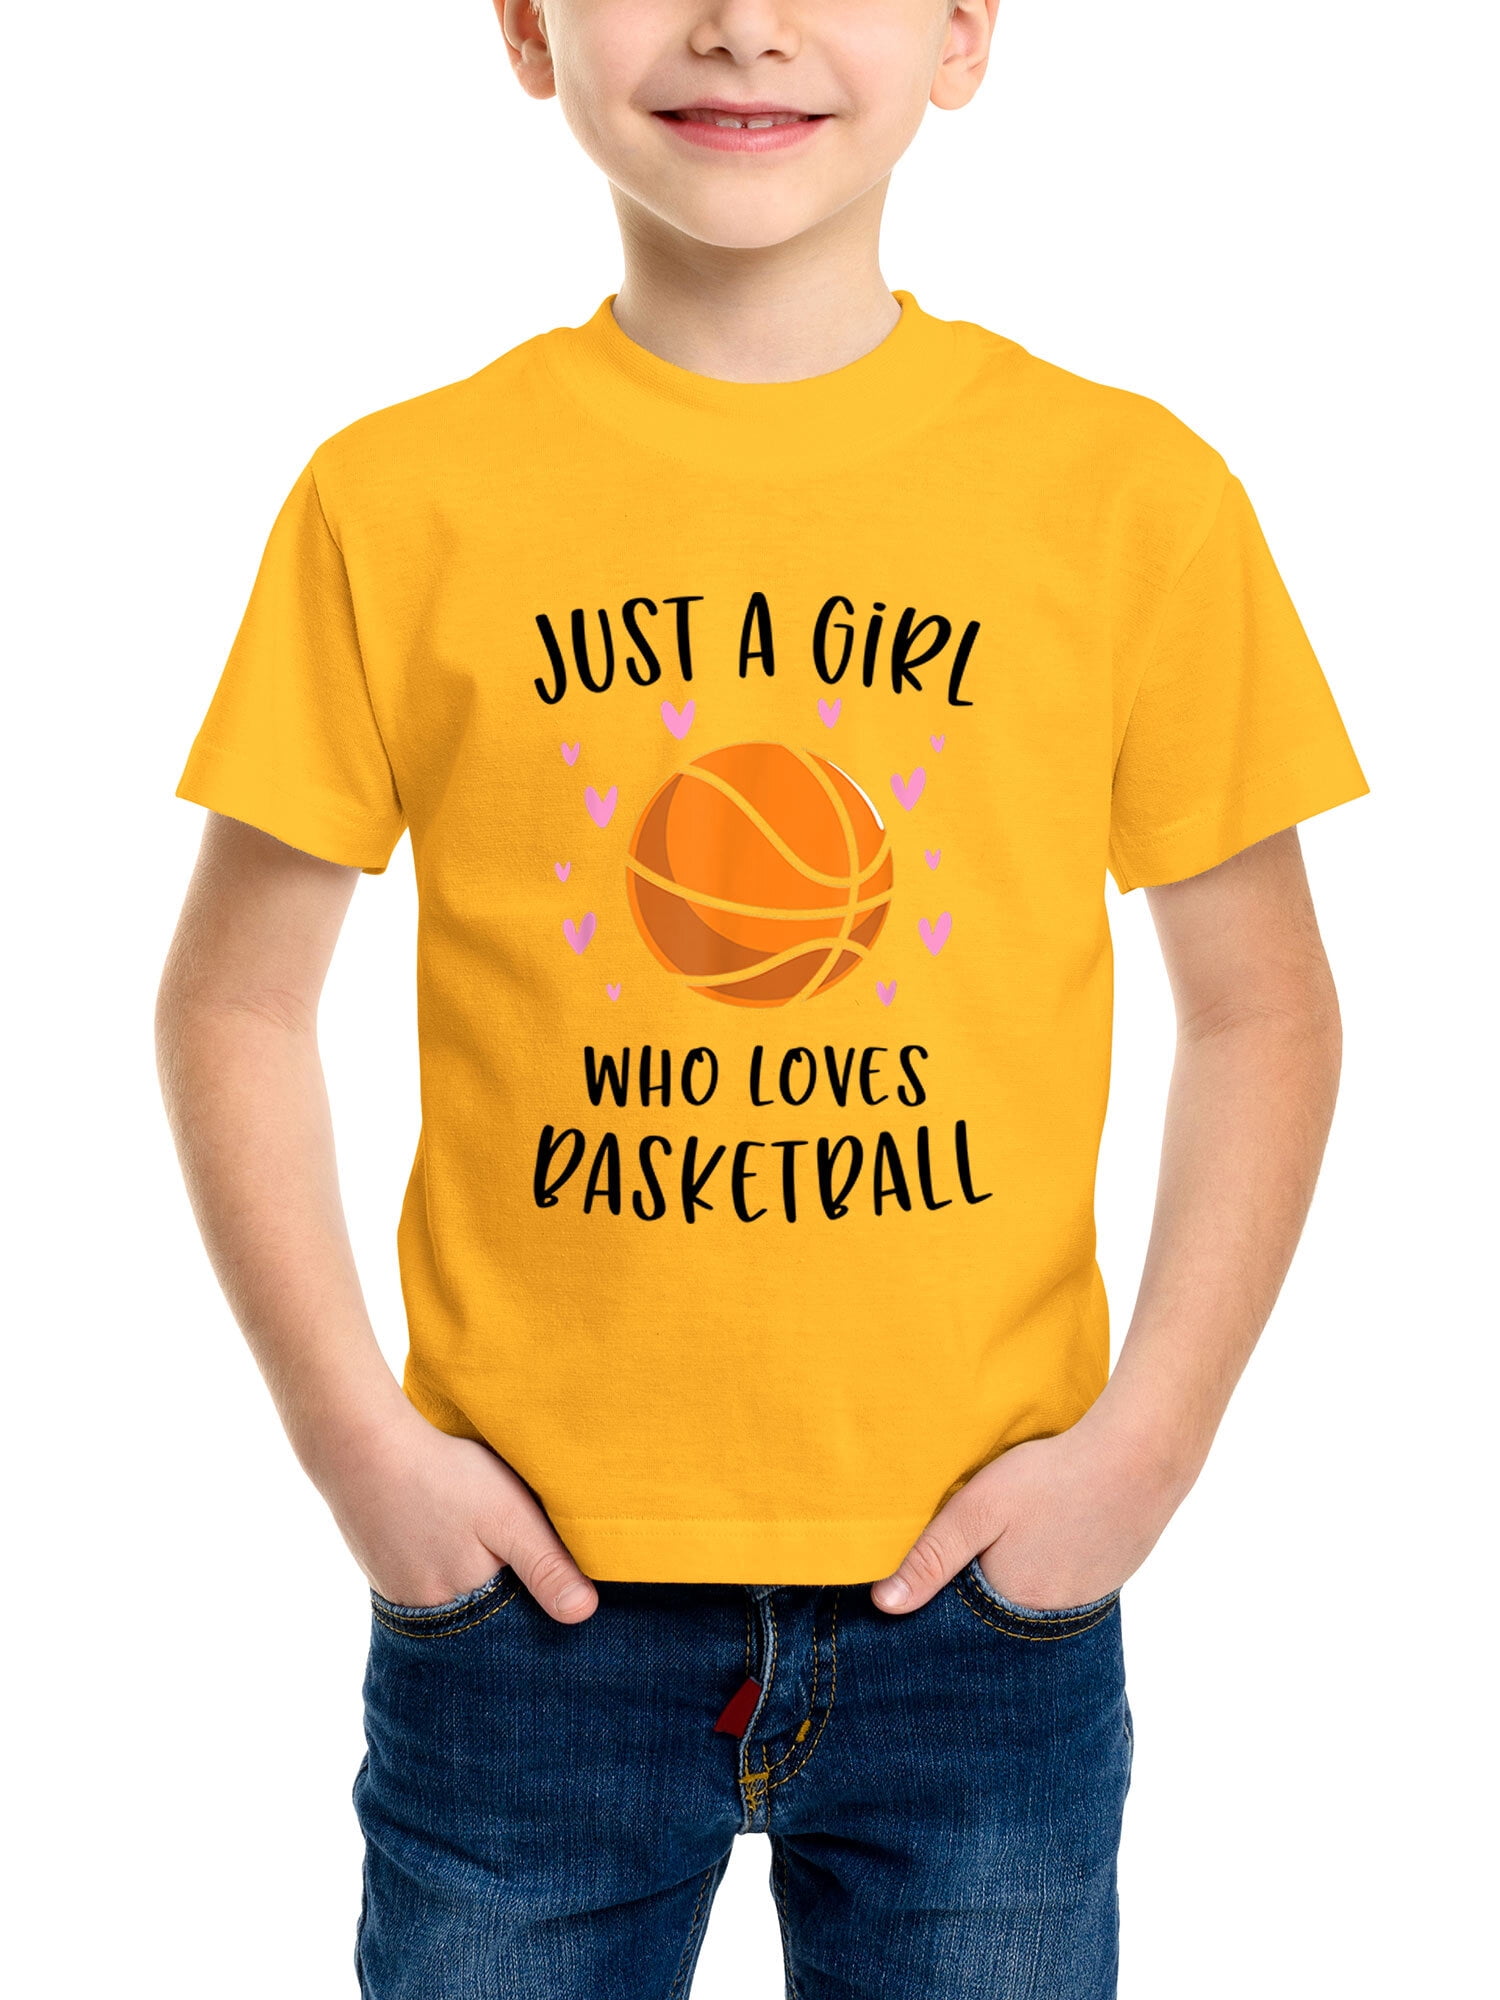 Basketball Children's Kids Childs Novelty T Shirt 